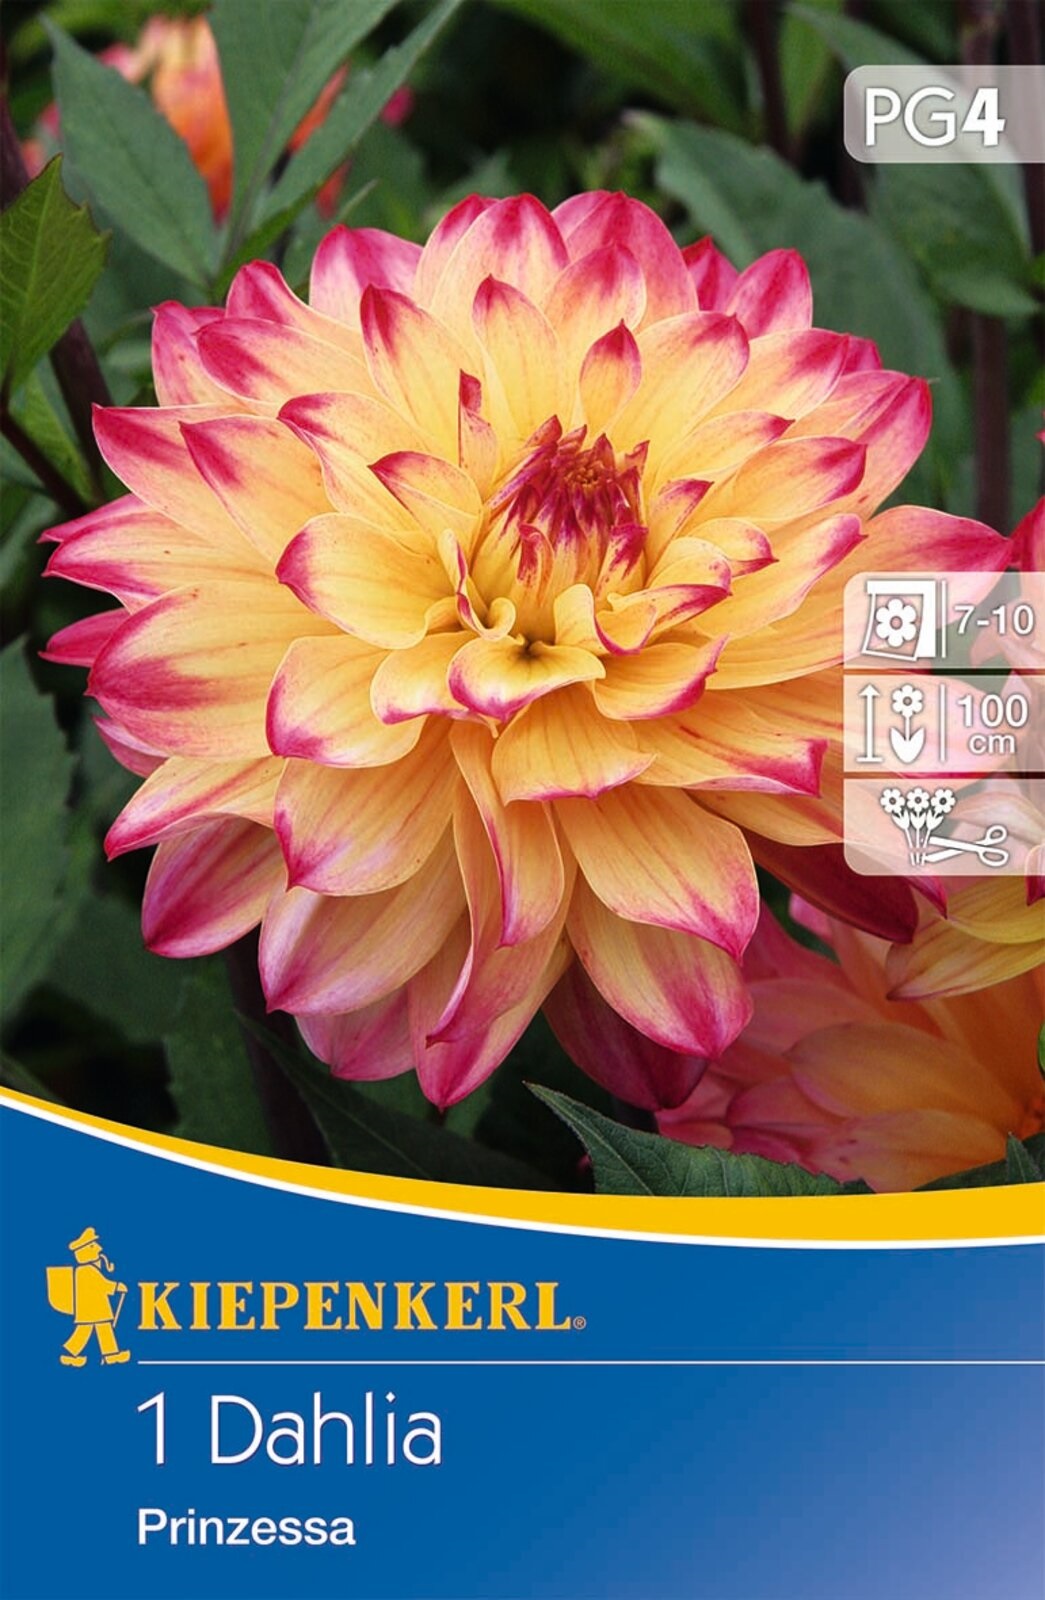 Flower bulb Dahlia Prinzessa (yellow-pink) Kiepenkerl 1 pc